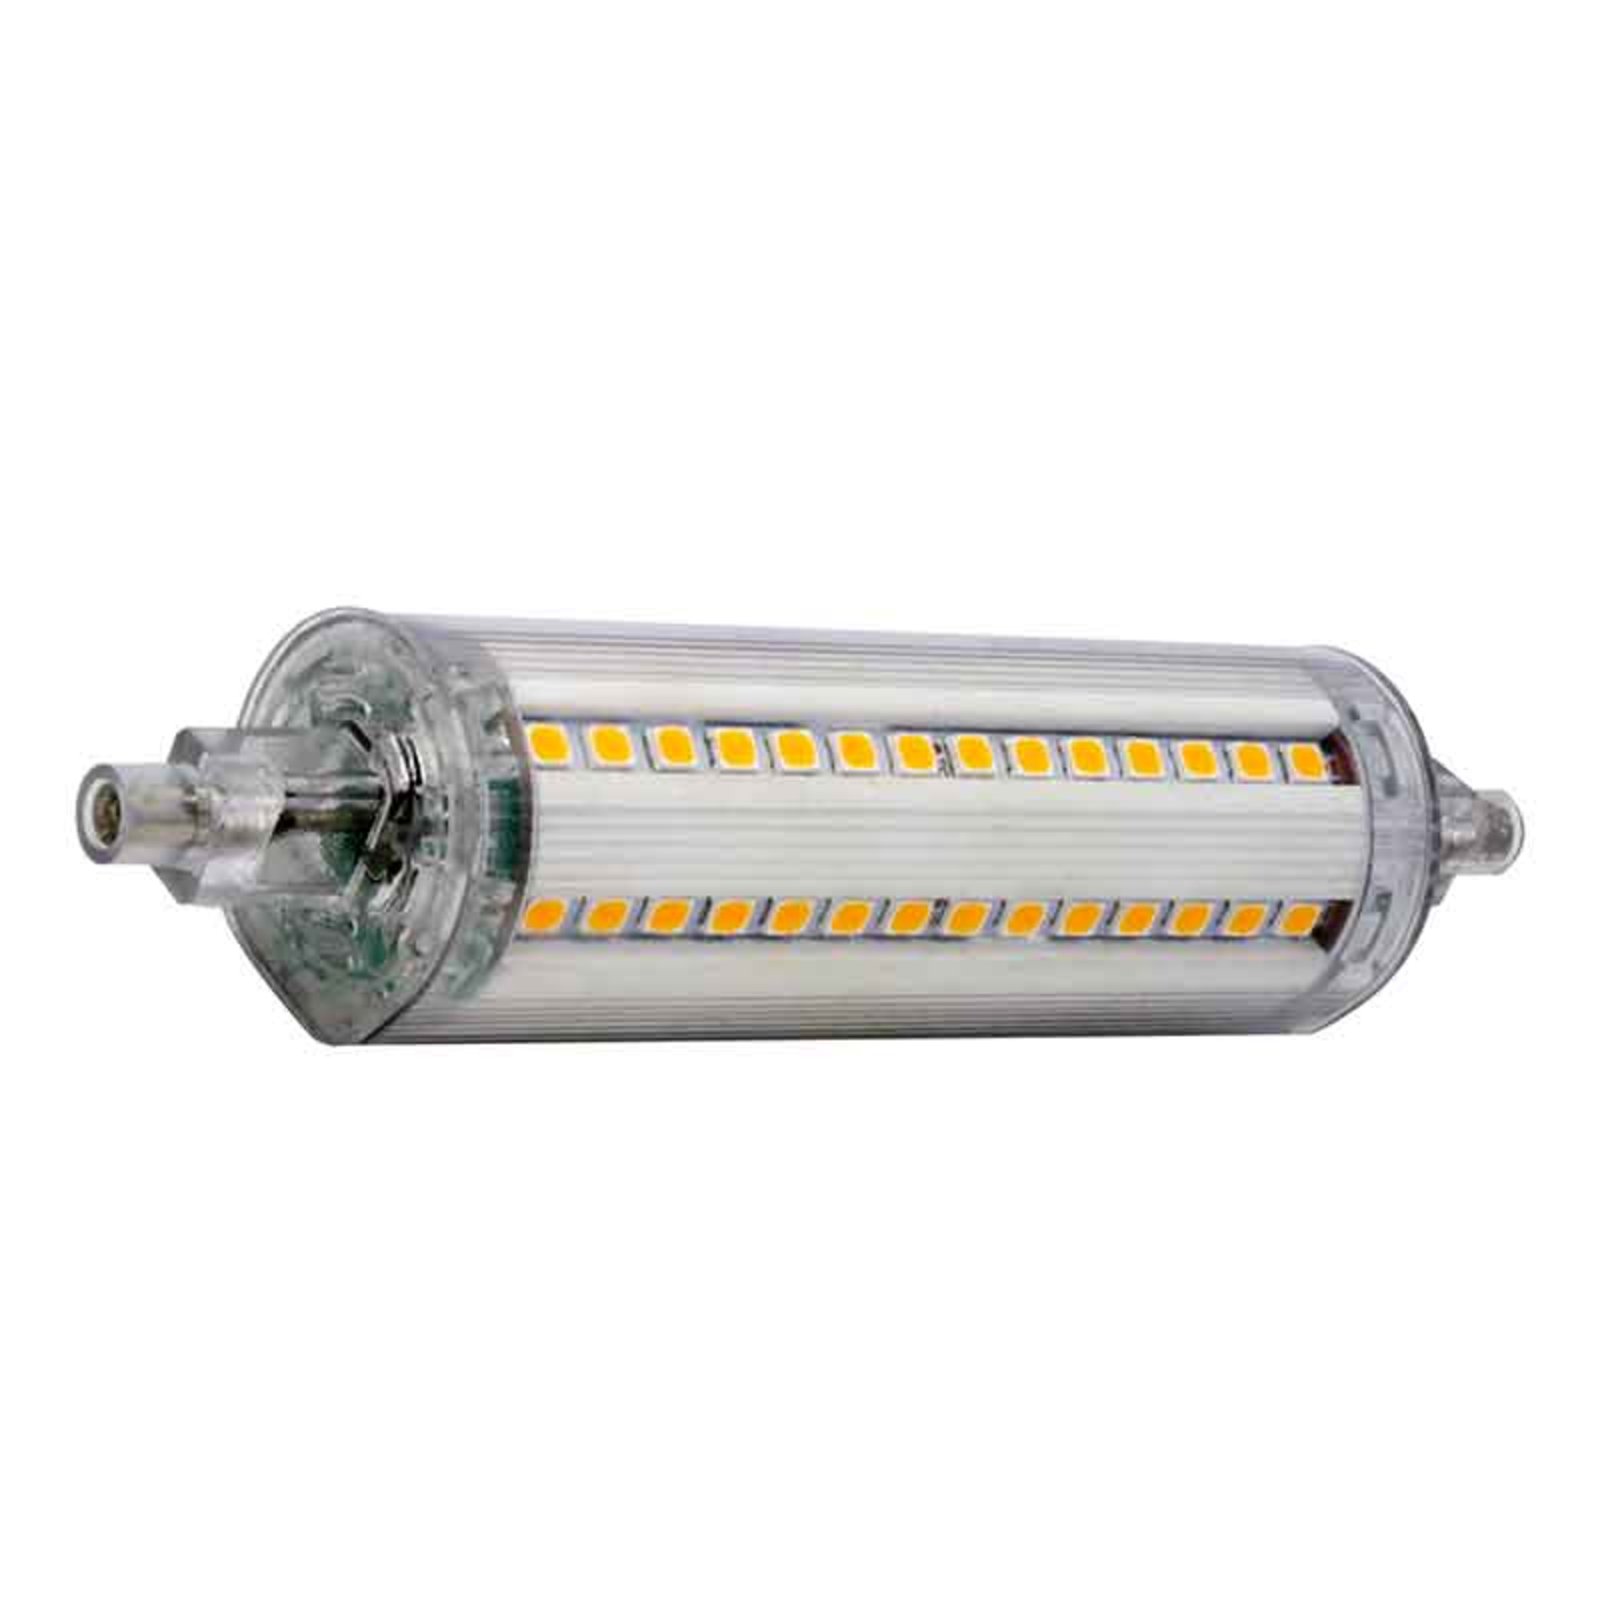 R7s 118mm lampadina tubolare LED 9W bianco neutro